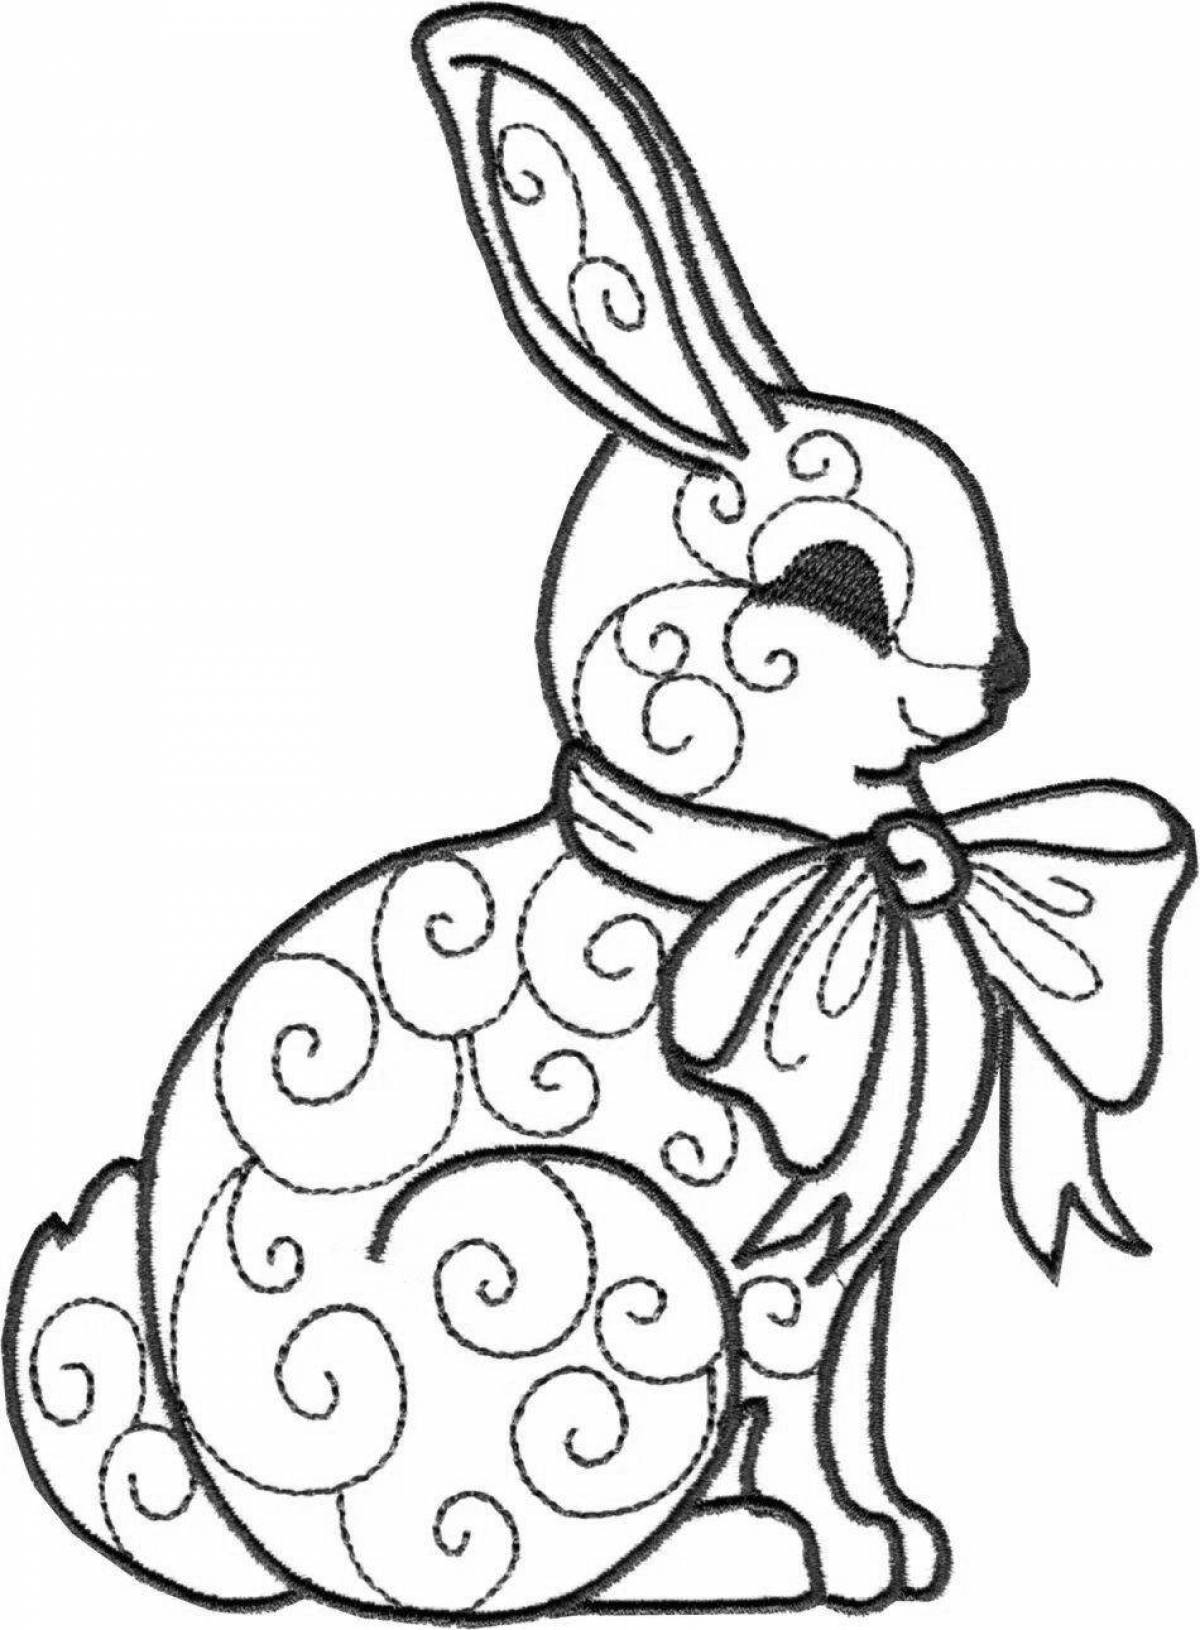 Christmas coloring book shining rabbit